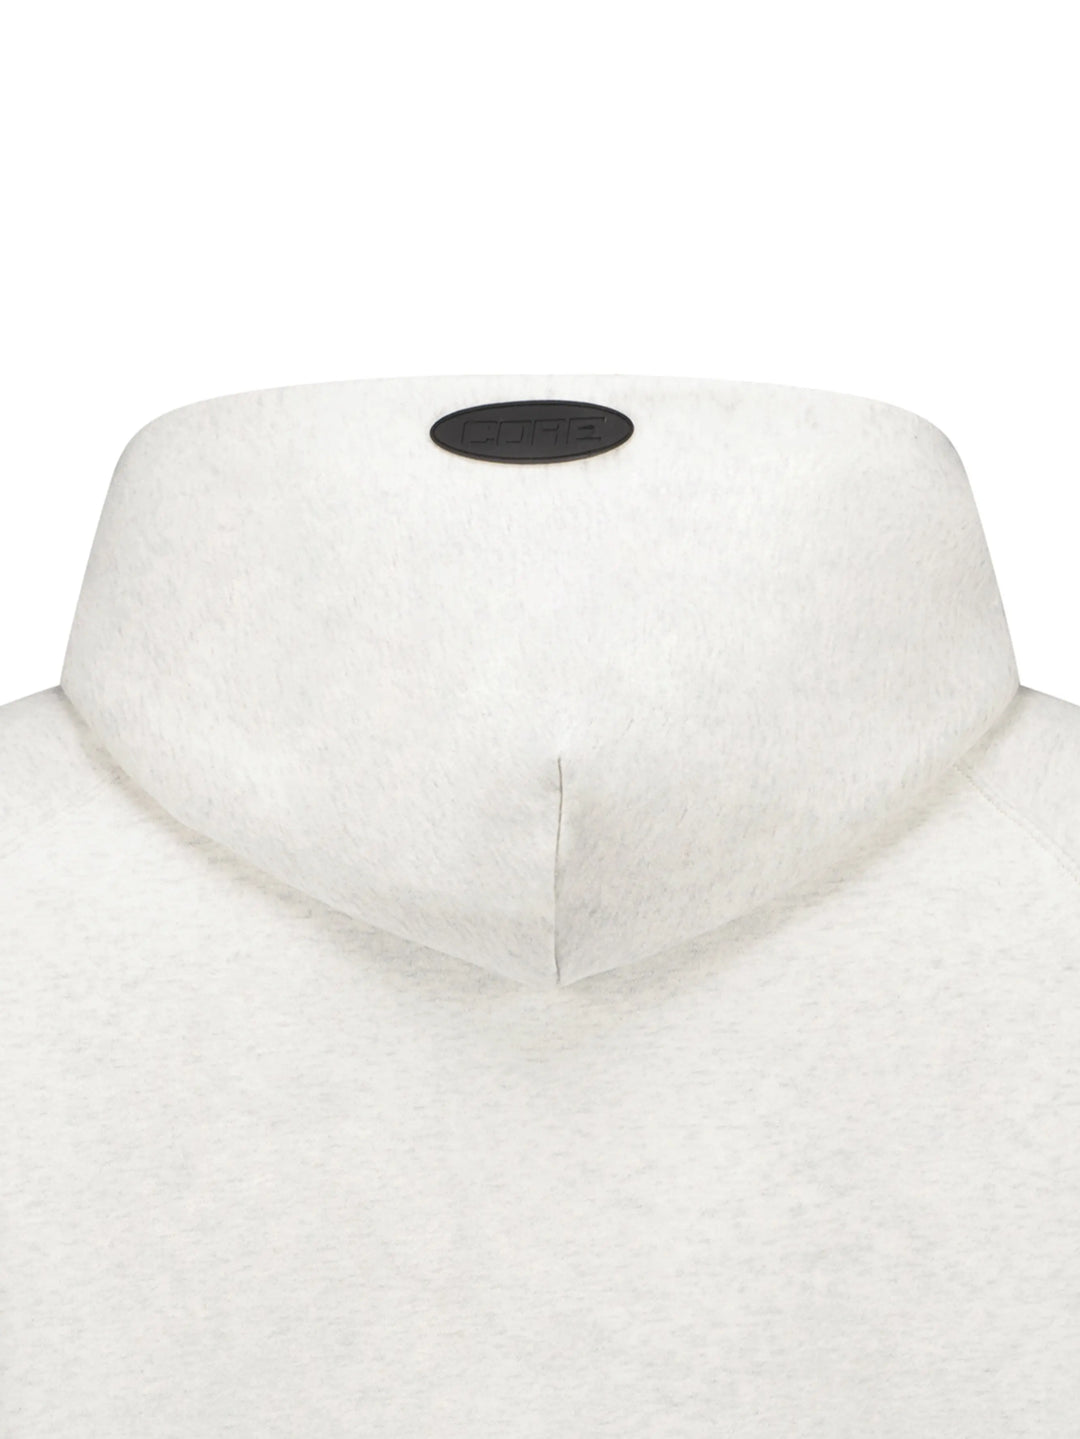 CORE Essential Raglan Sleeve Hoodie Ecru Grey in Auckland, New Zealand - Shop name